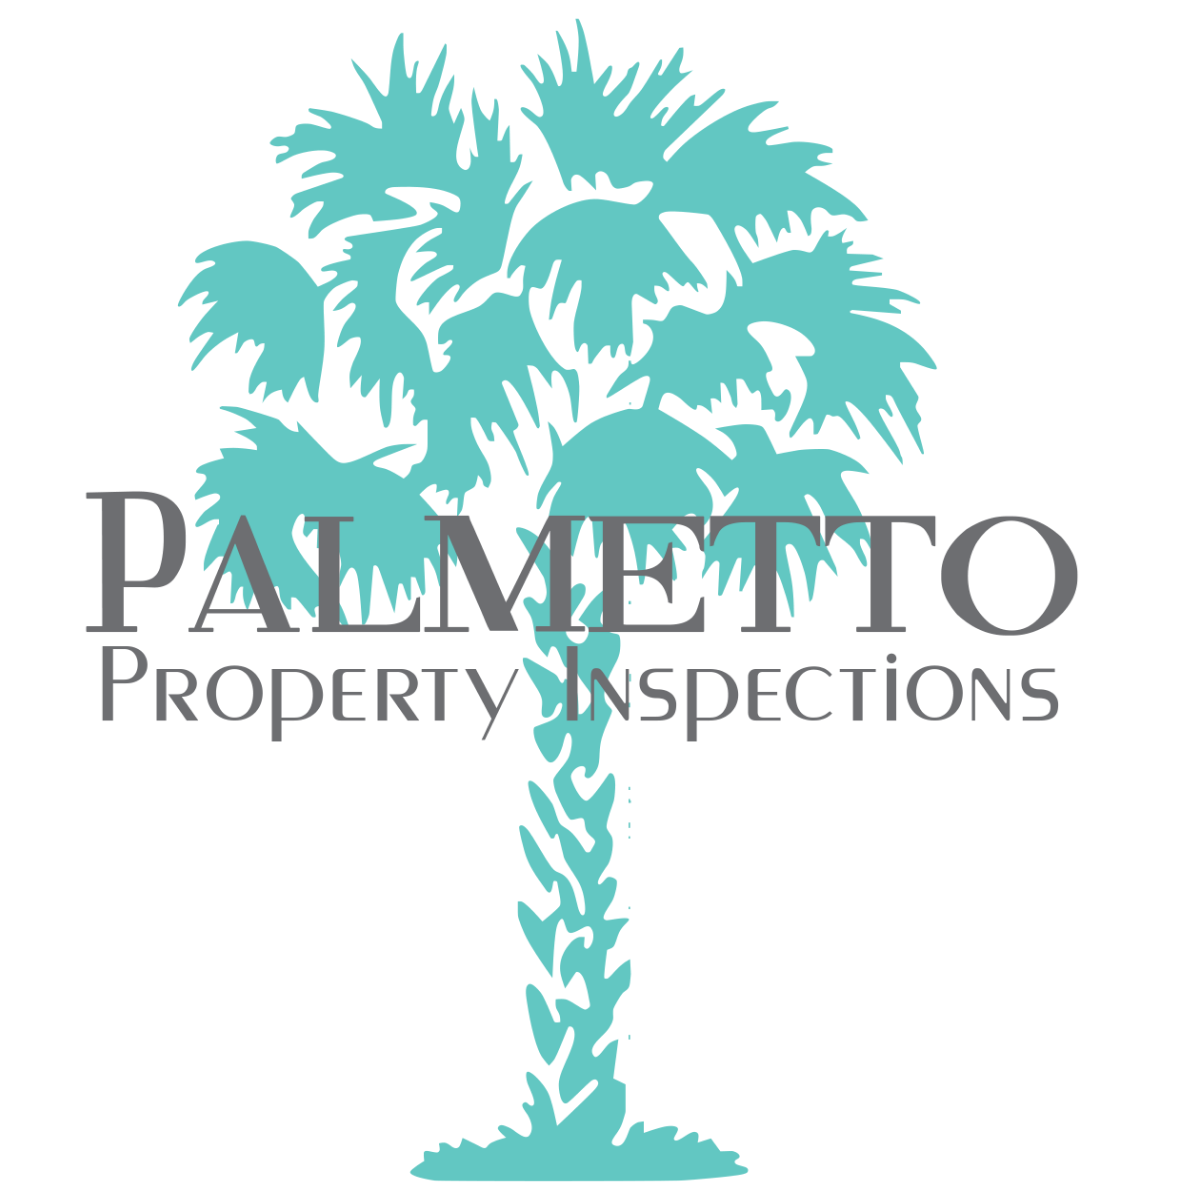 palmetto property inspections logo